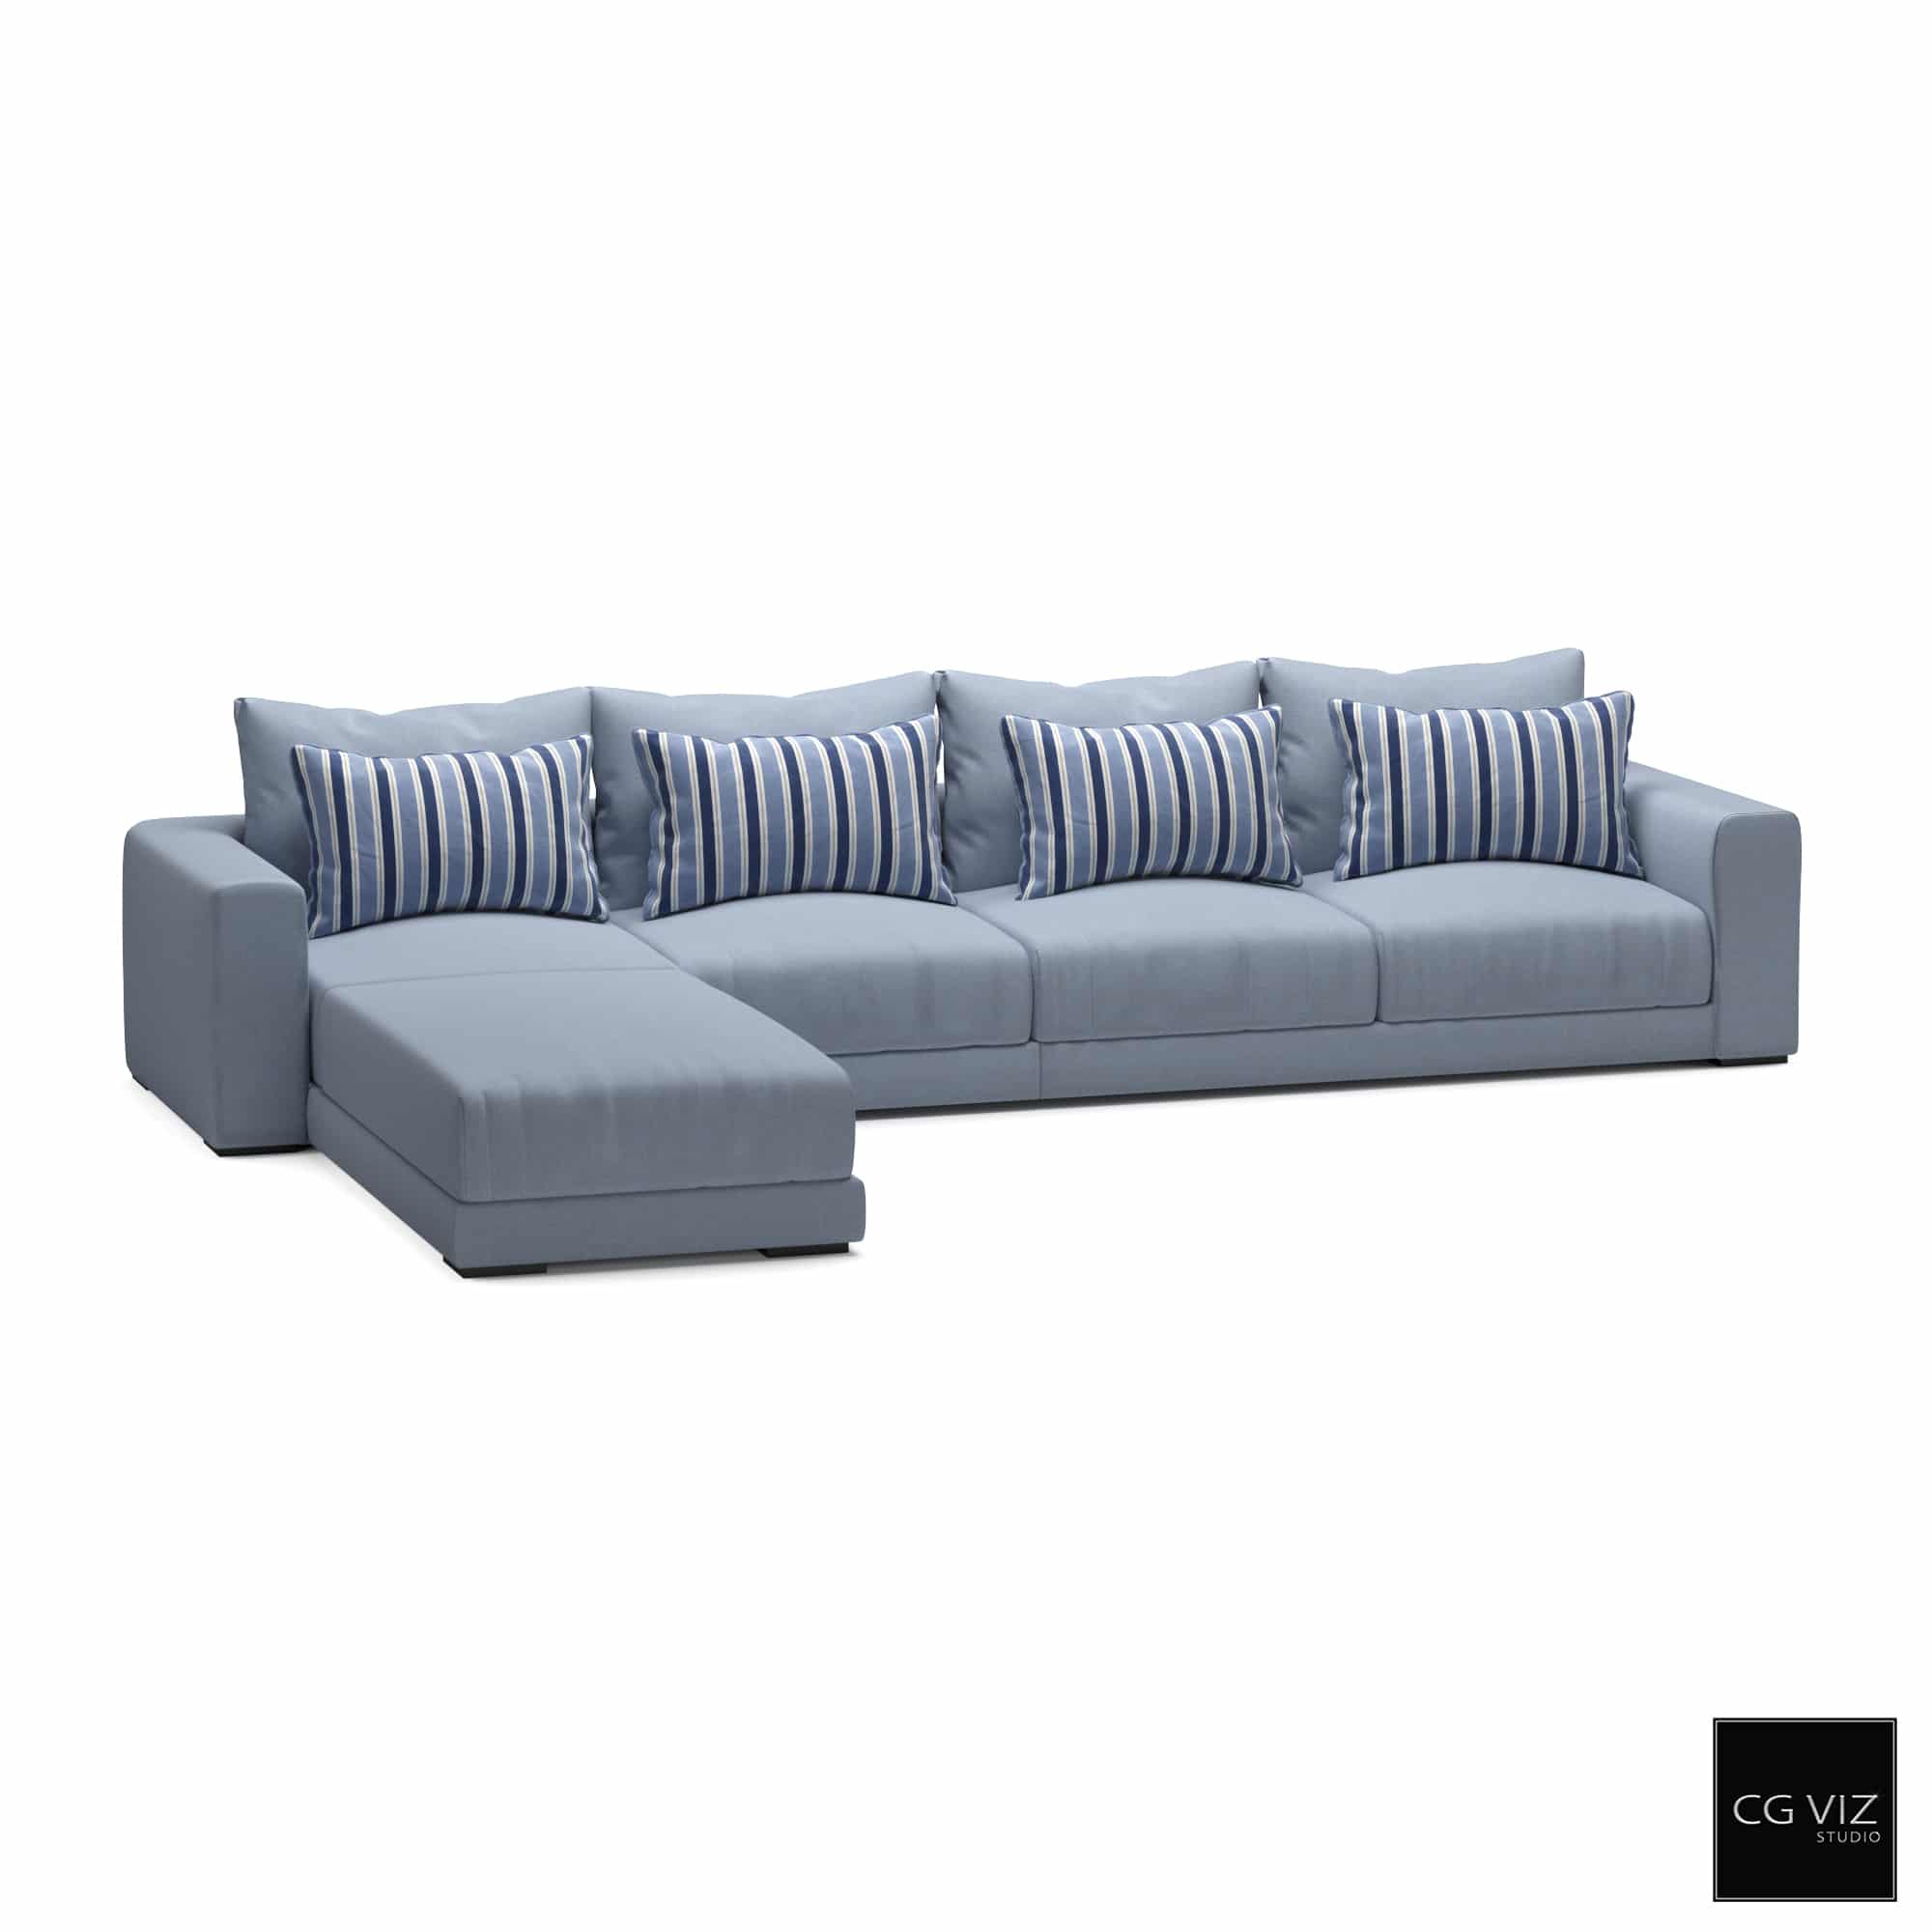 Rendered Preview of Living Room Sofa CGVAM_005 3D Model by CG Viz Studio